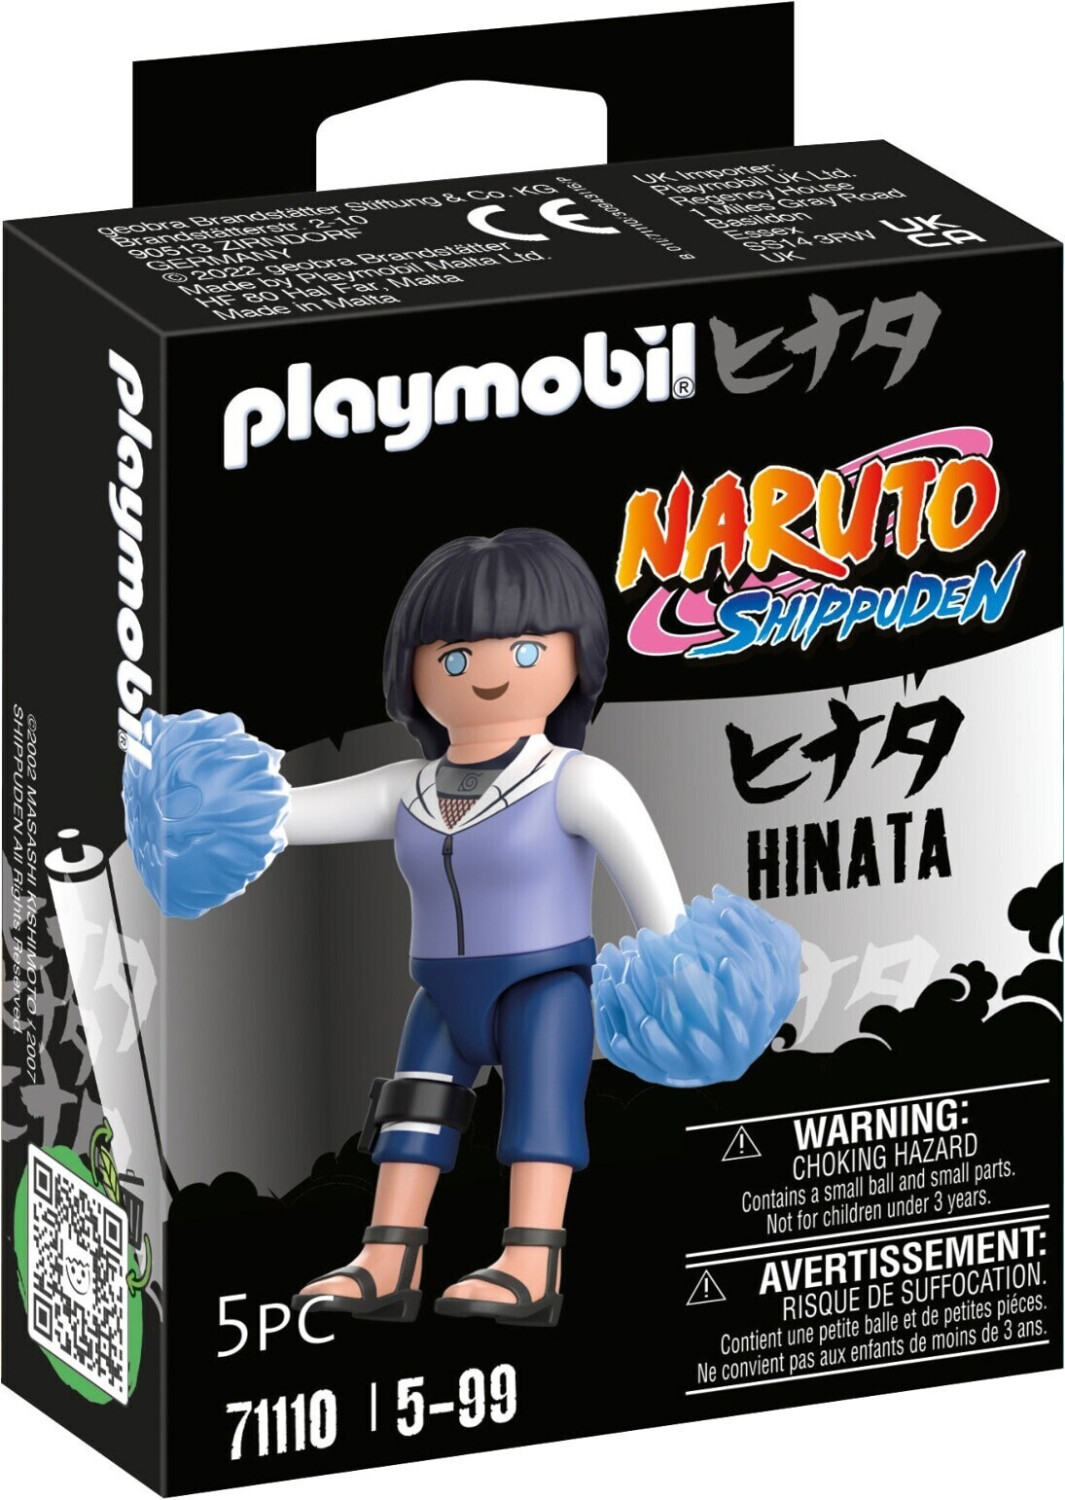 Photos - Toy Car Playmobil Naruto Shippuden - Hinata  (71110)